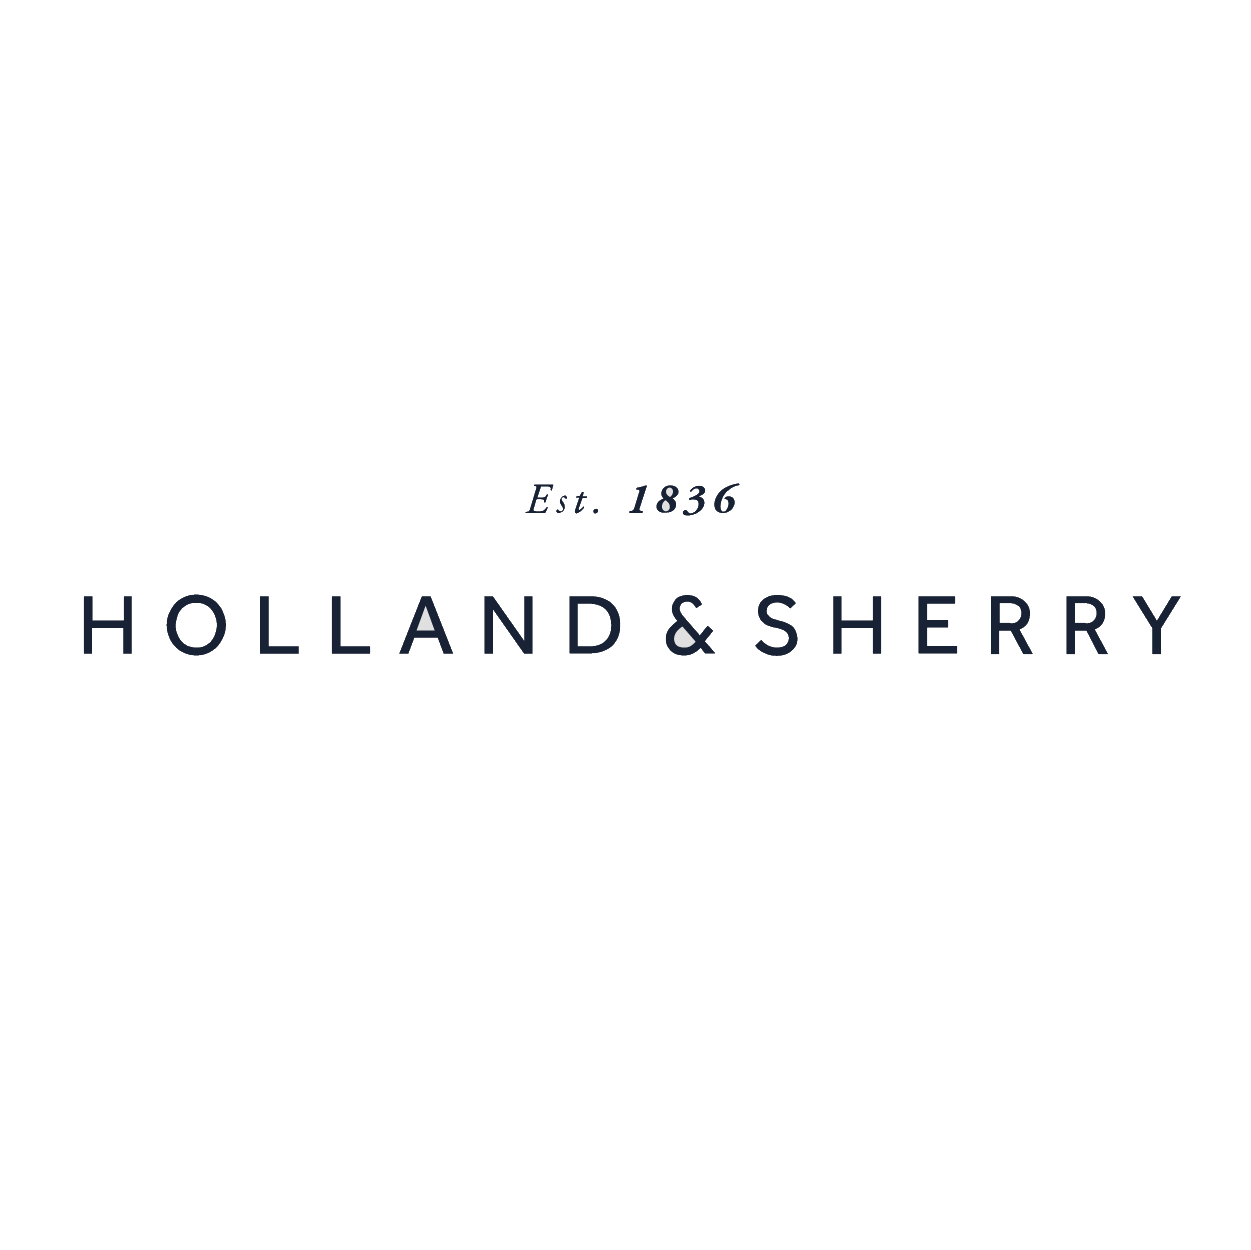 HOLLAND-SHERRY